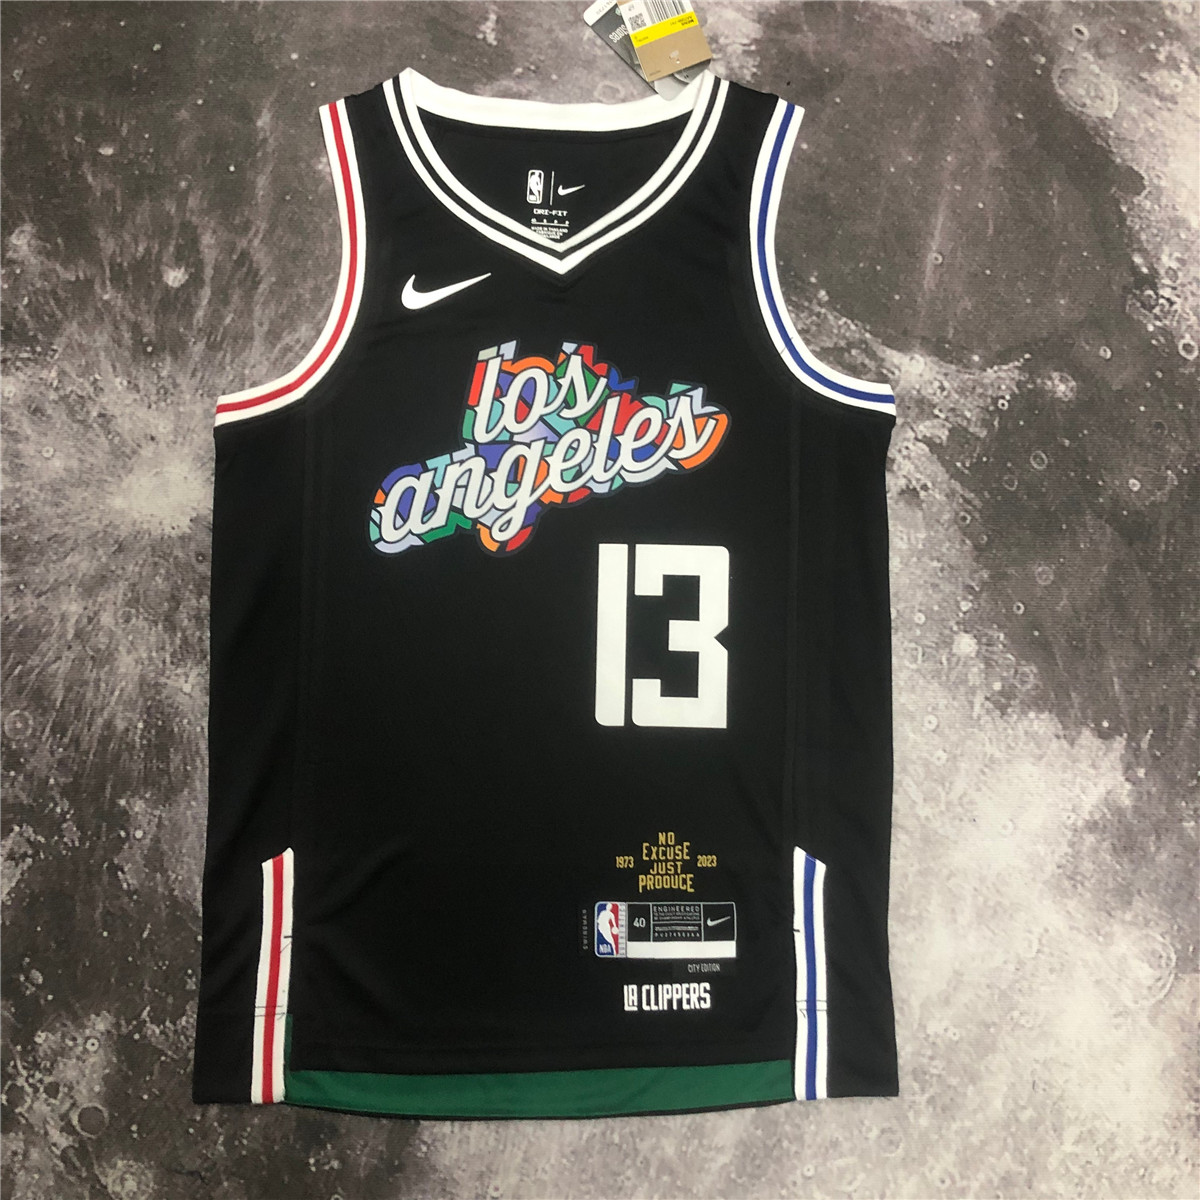 Los Angeles Clippers Nike City Edition Swingman Jersey 22 - Black